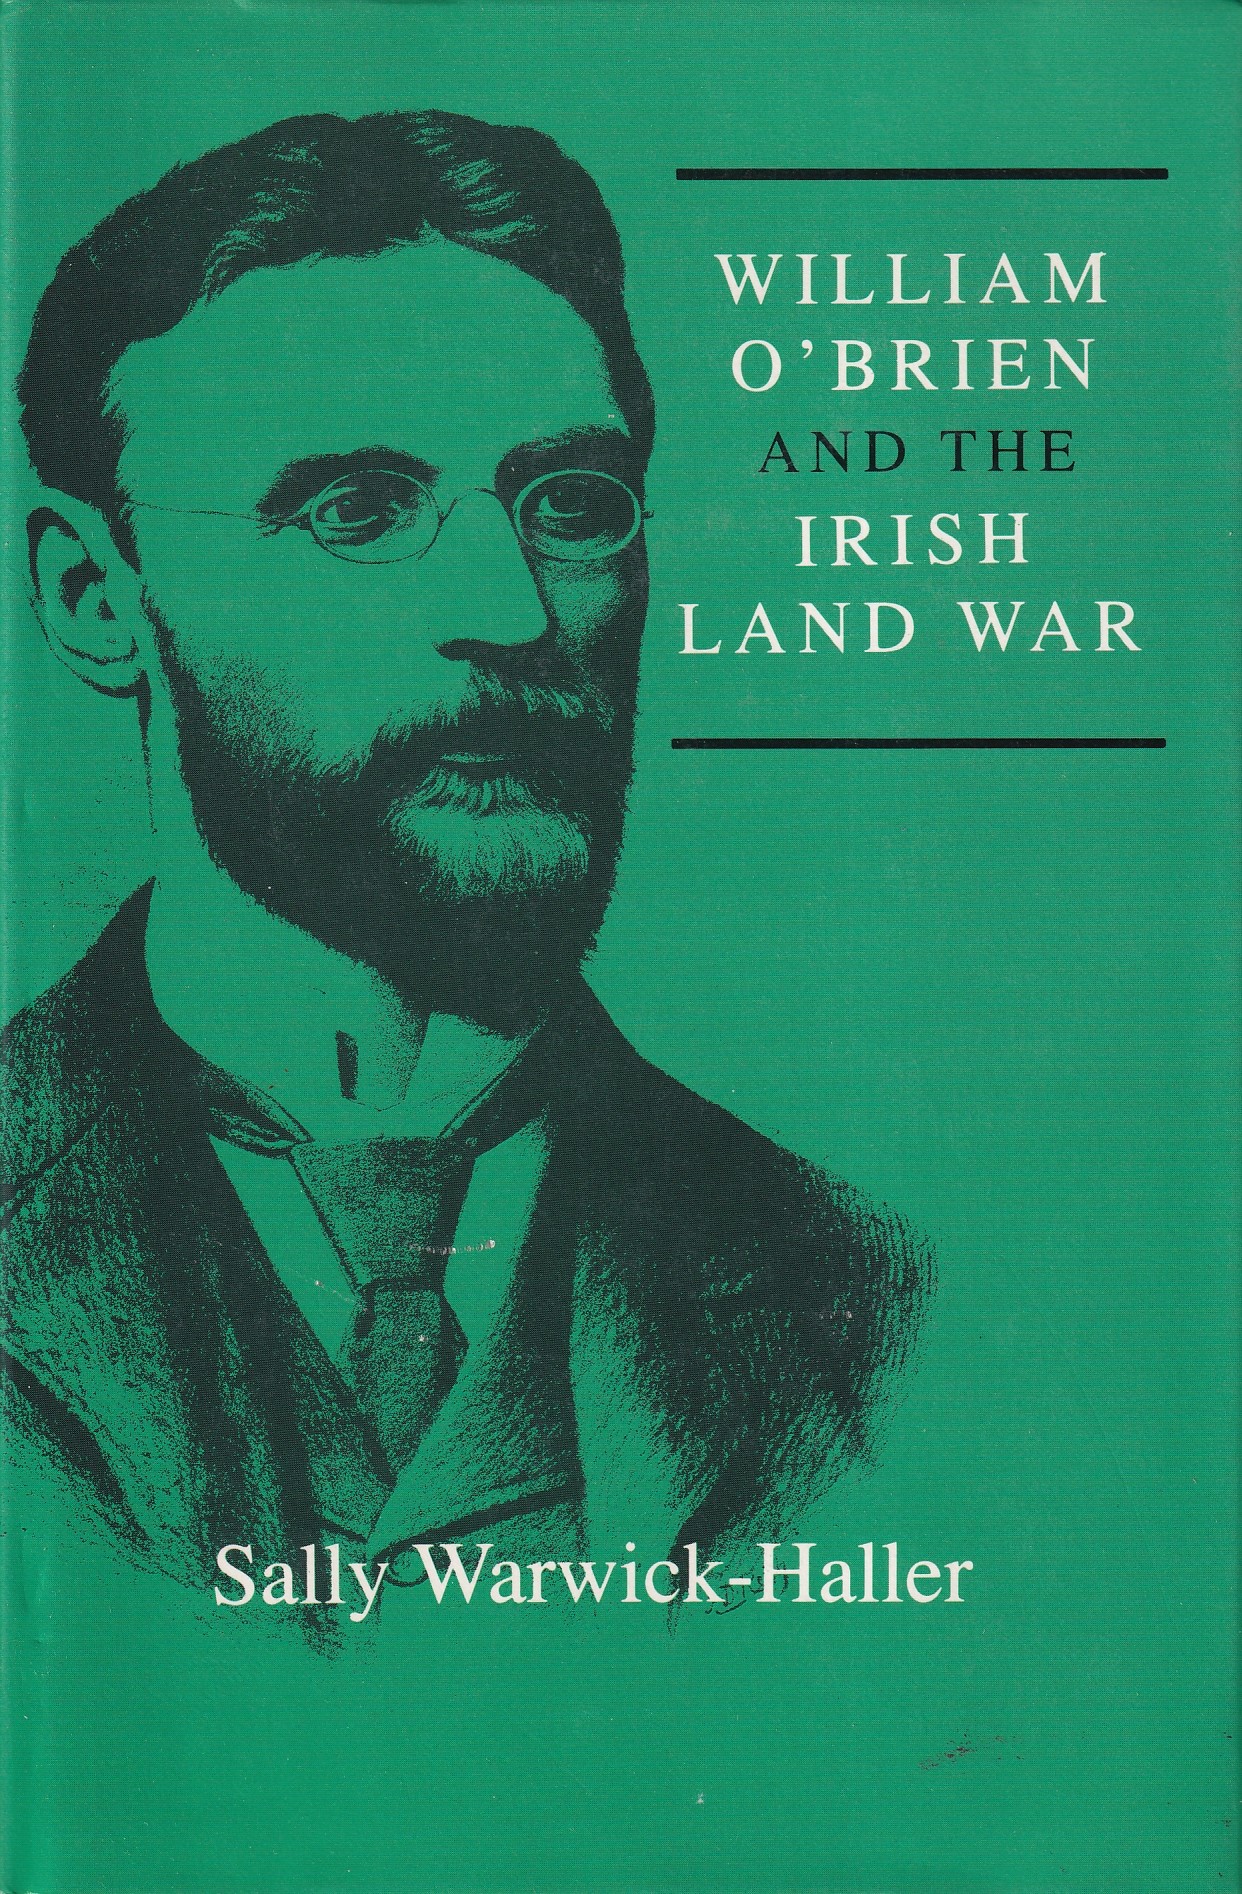 William O’Brien and the Irish Land War by Sally Warwick-Haller